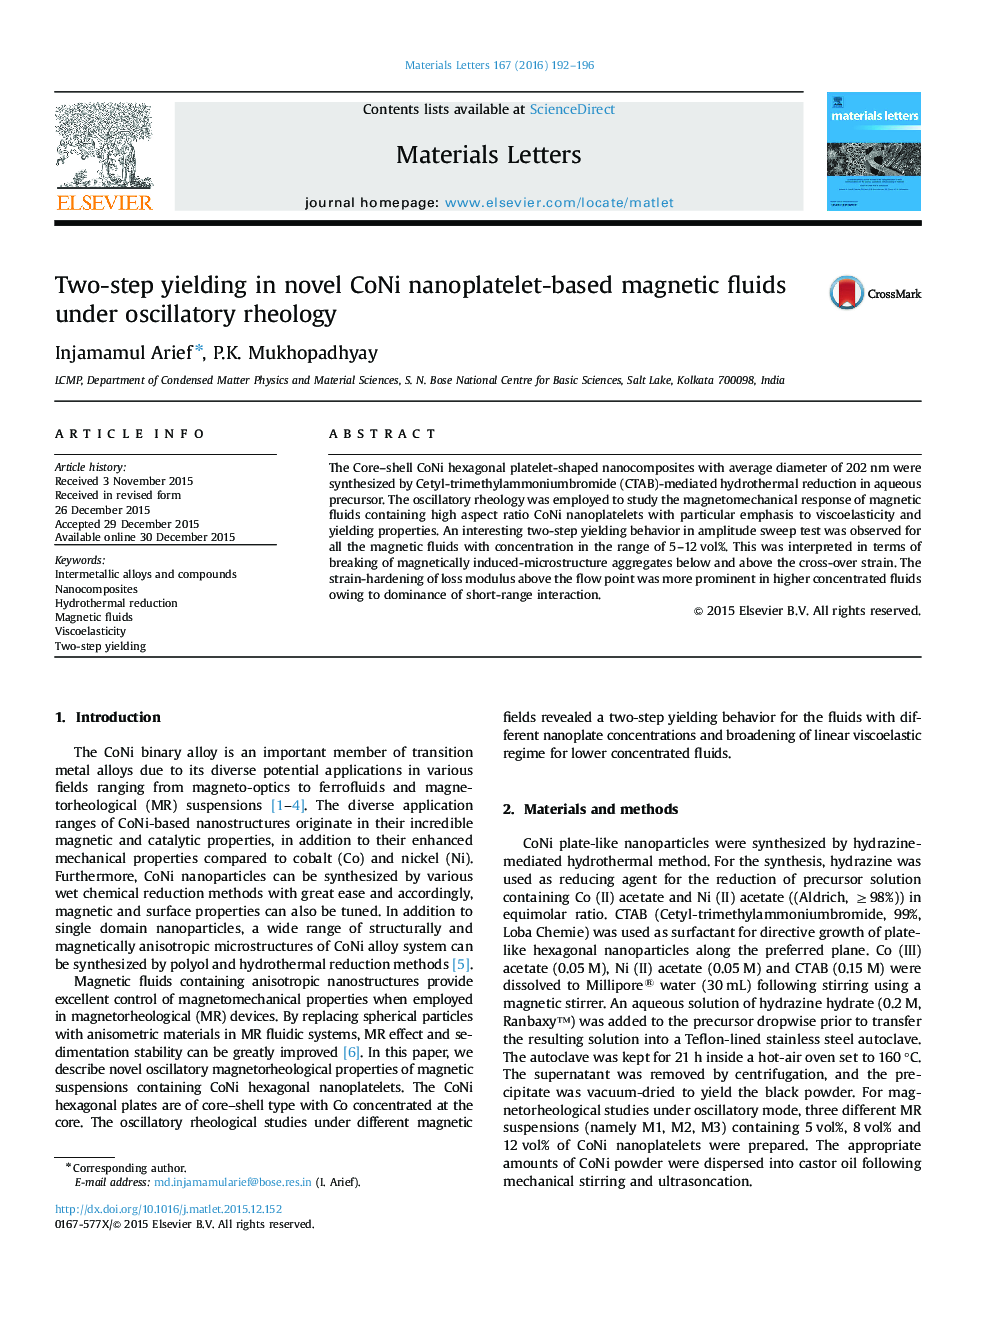 Two-step yielding in novel CoNi nanoplatelet-based magnetic fluids under oscillatory rheology